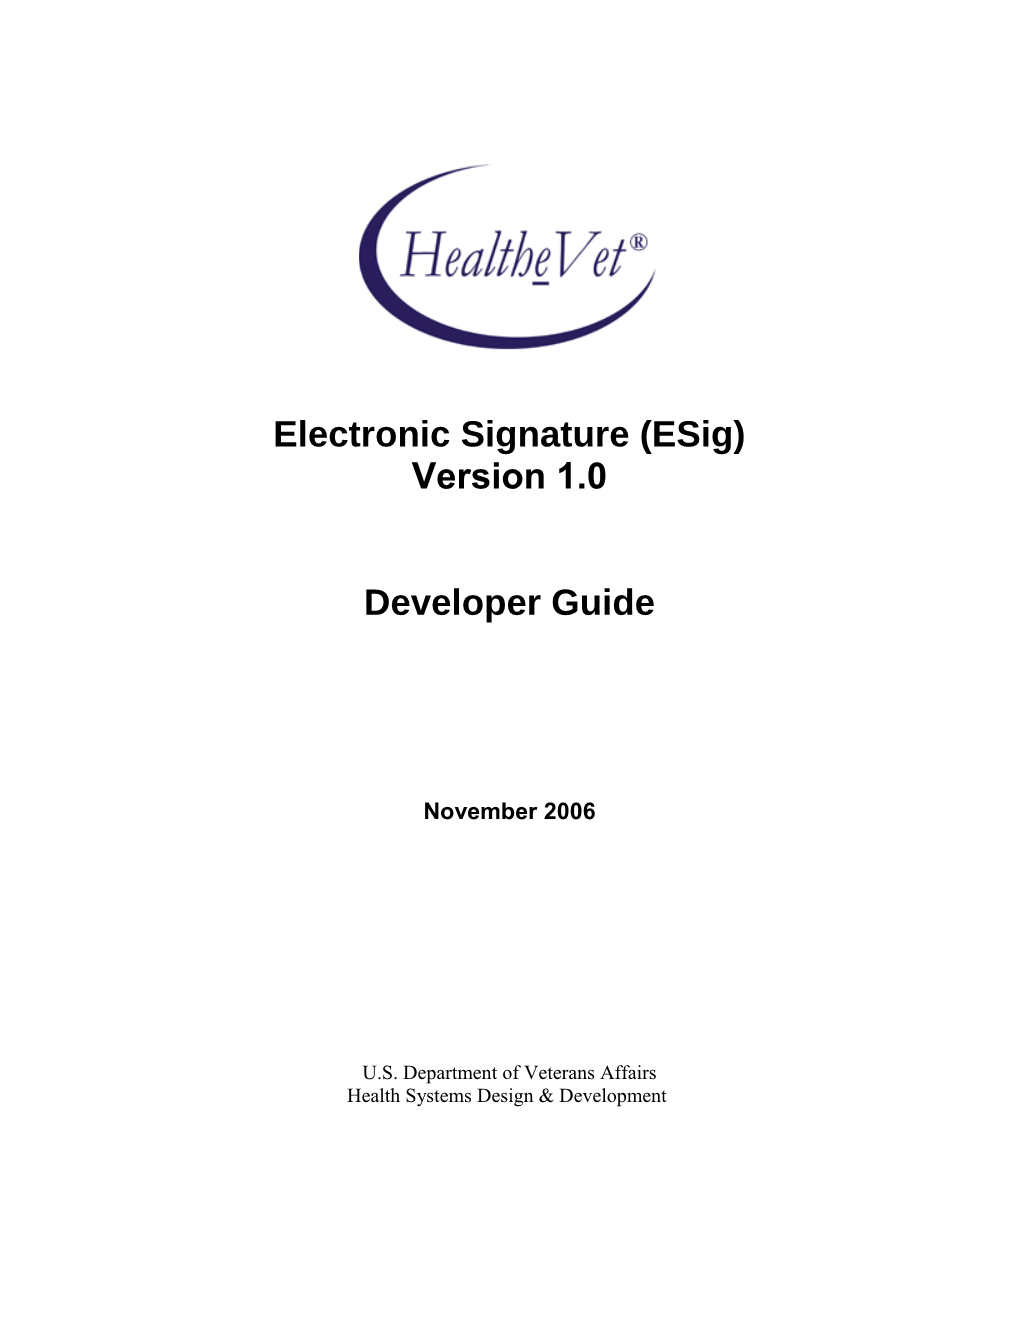 Electronic Signature 1.0 Developer Guide